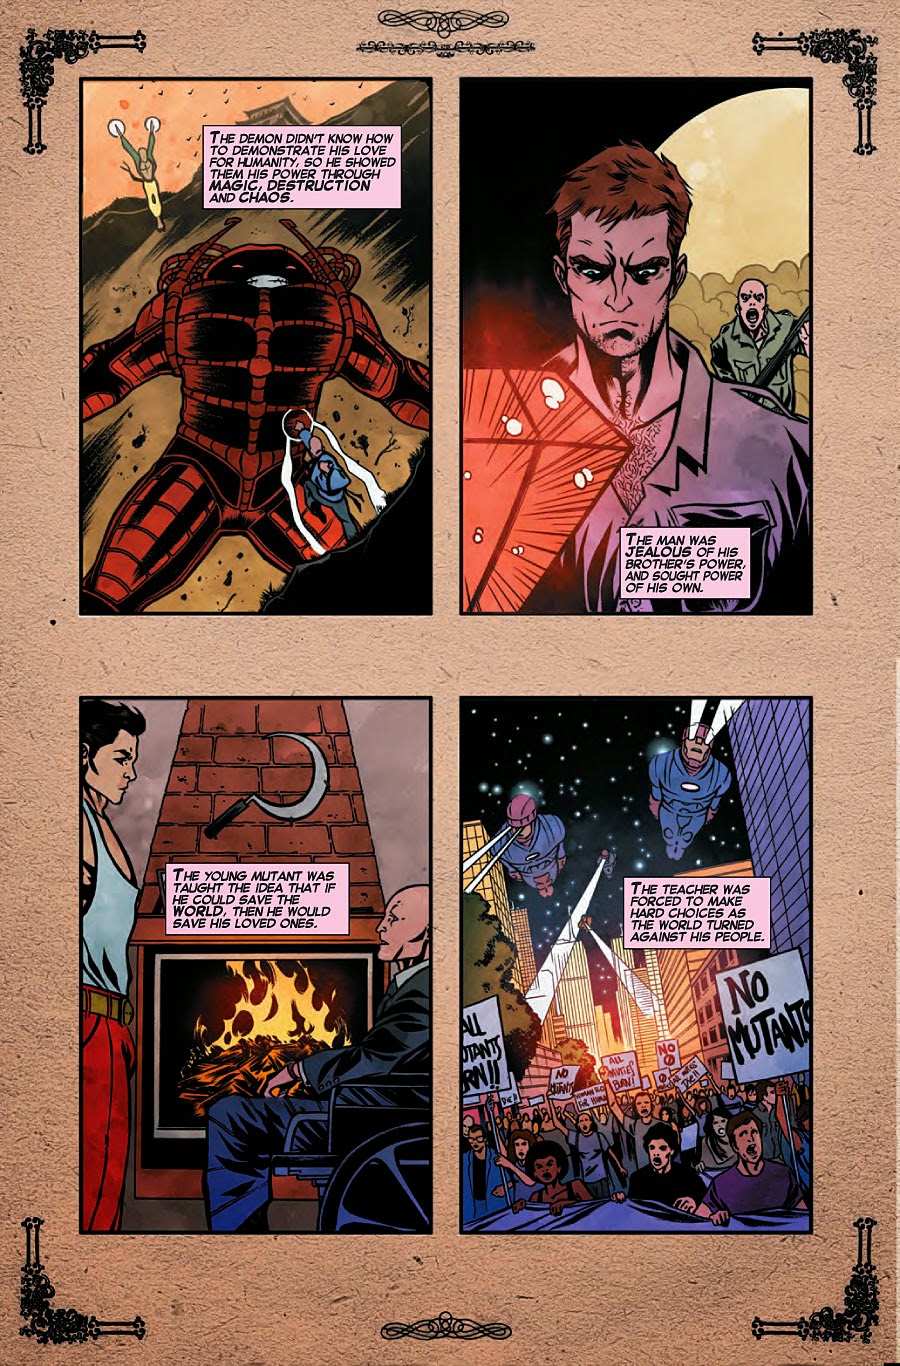 Amazing X-Men #19 artwork by Jorge Fornes and Rachelle Rosenberg